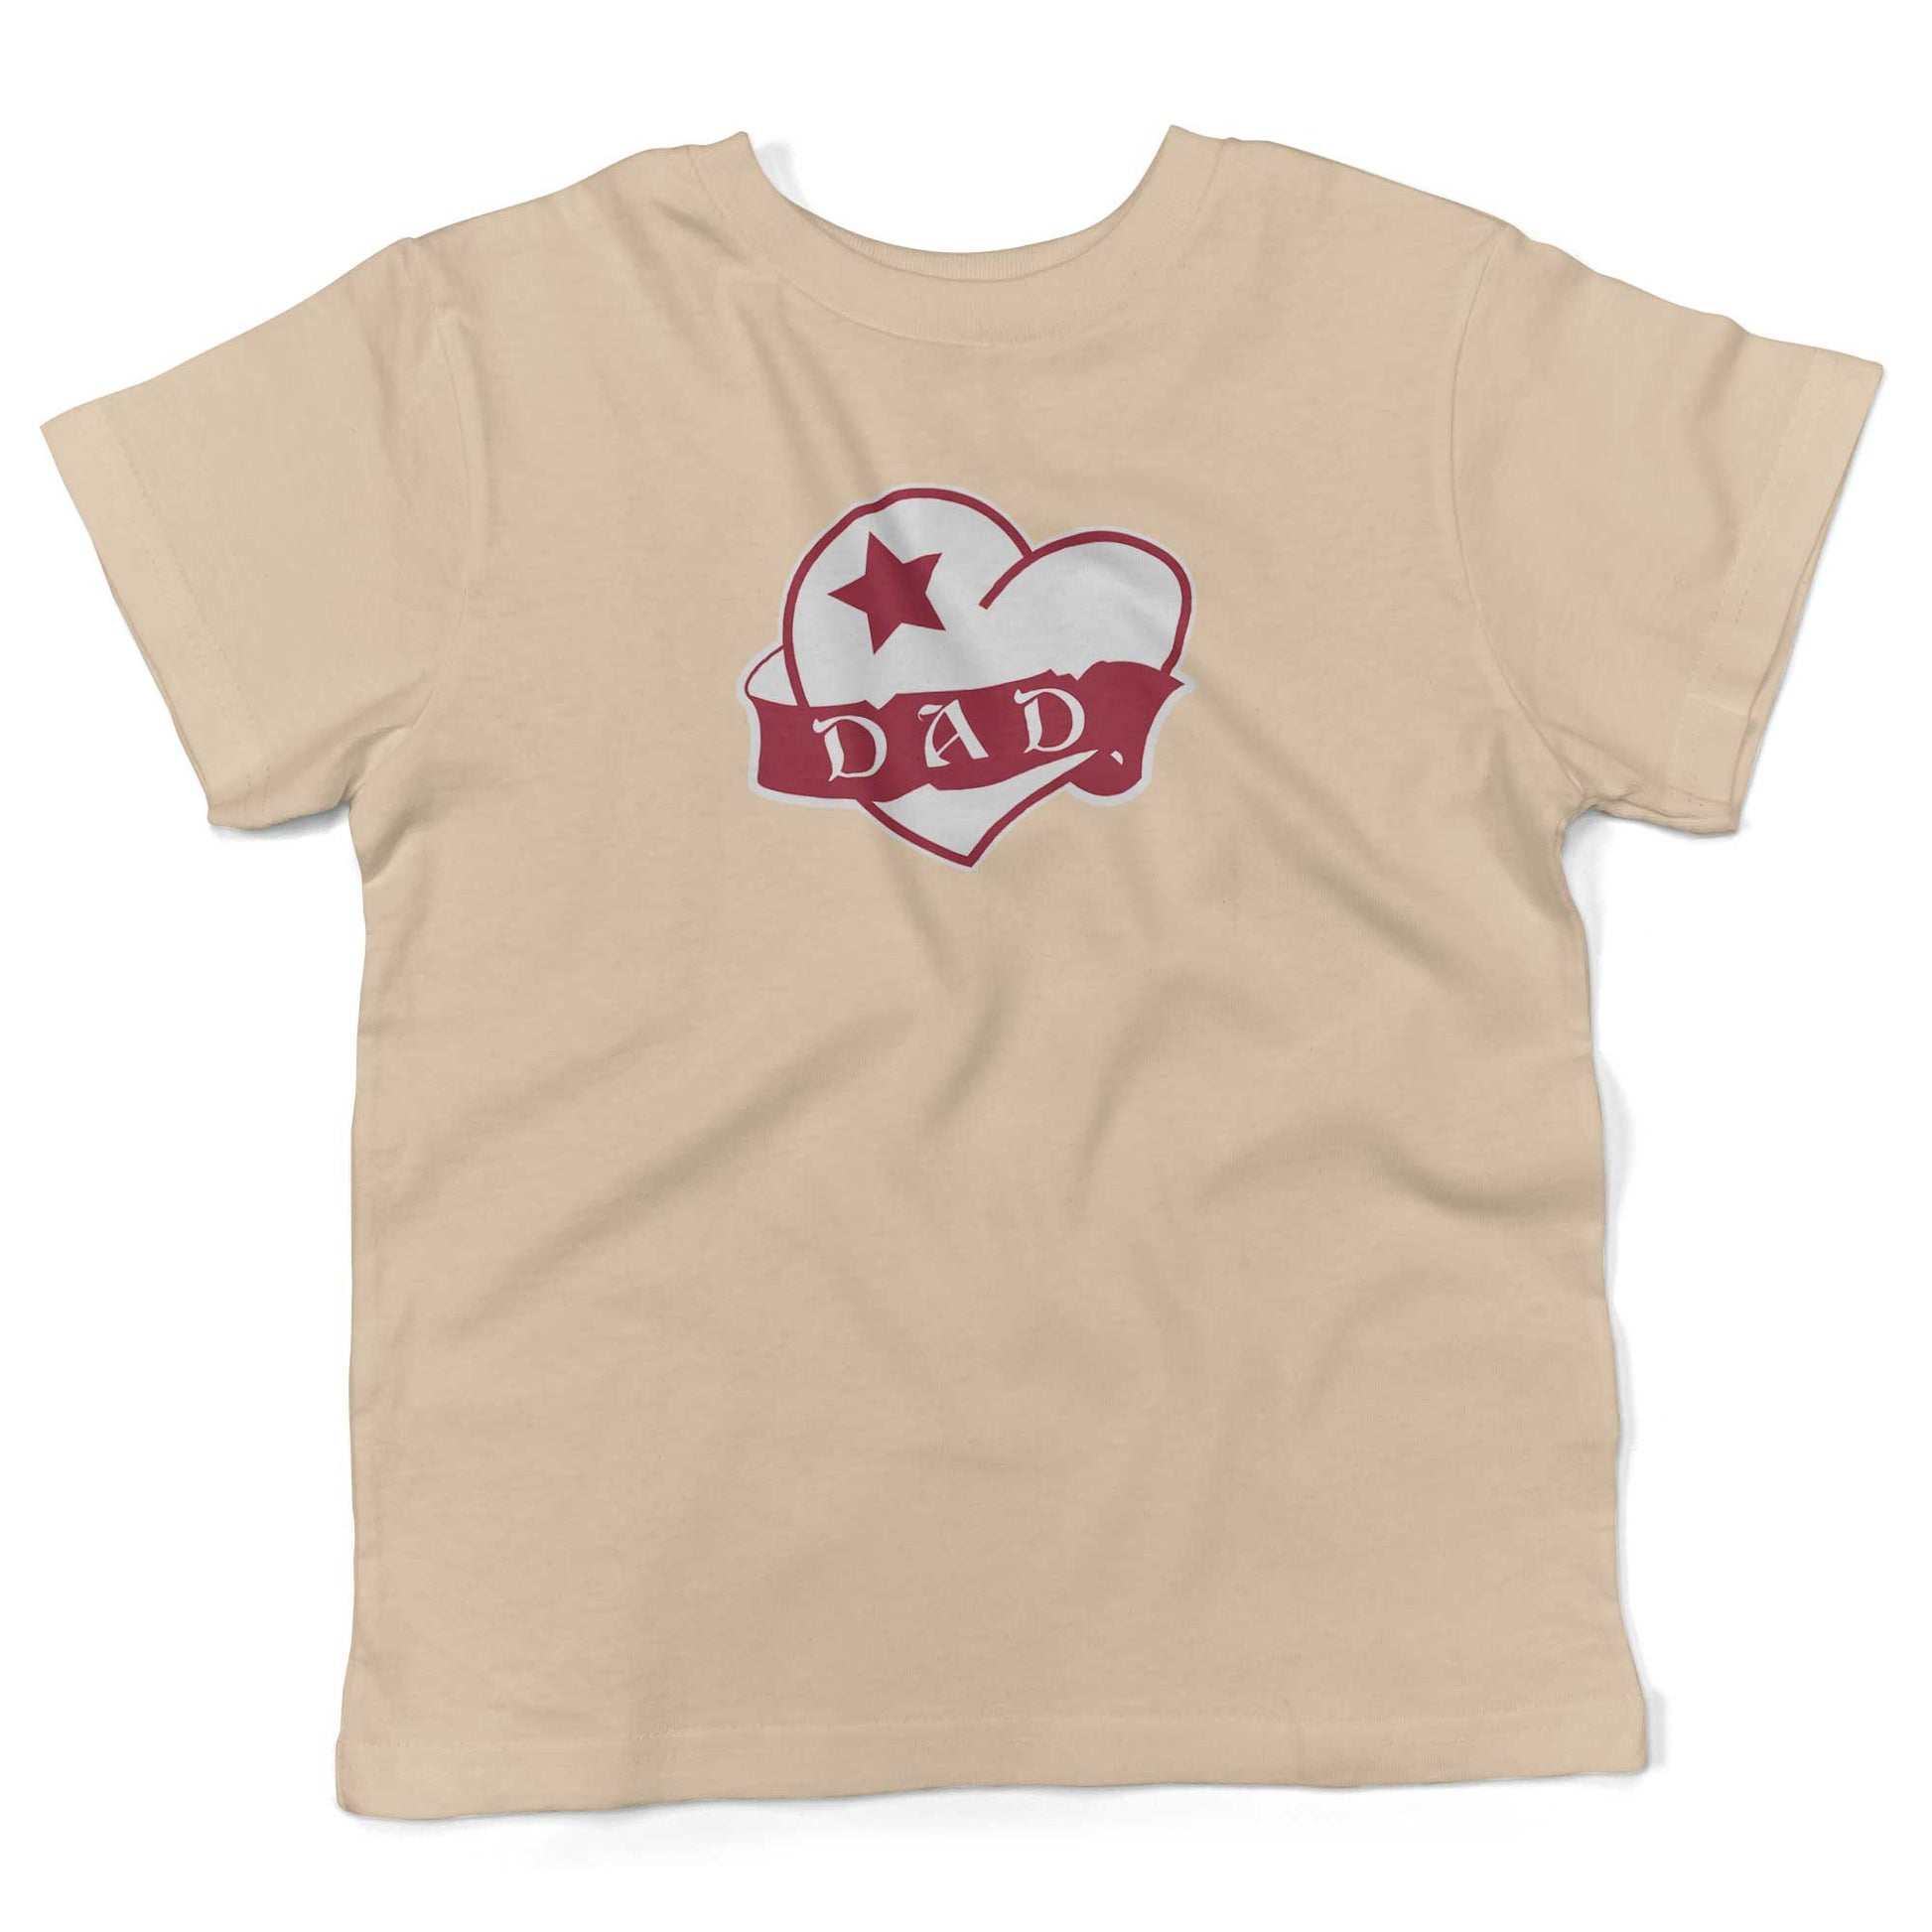 Dad Tattoo Heart Toddler Shirt-Organic Natural-2T